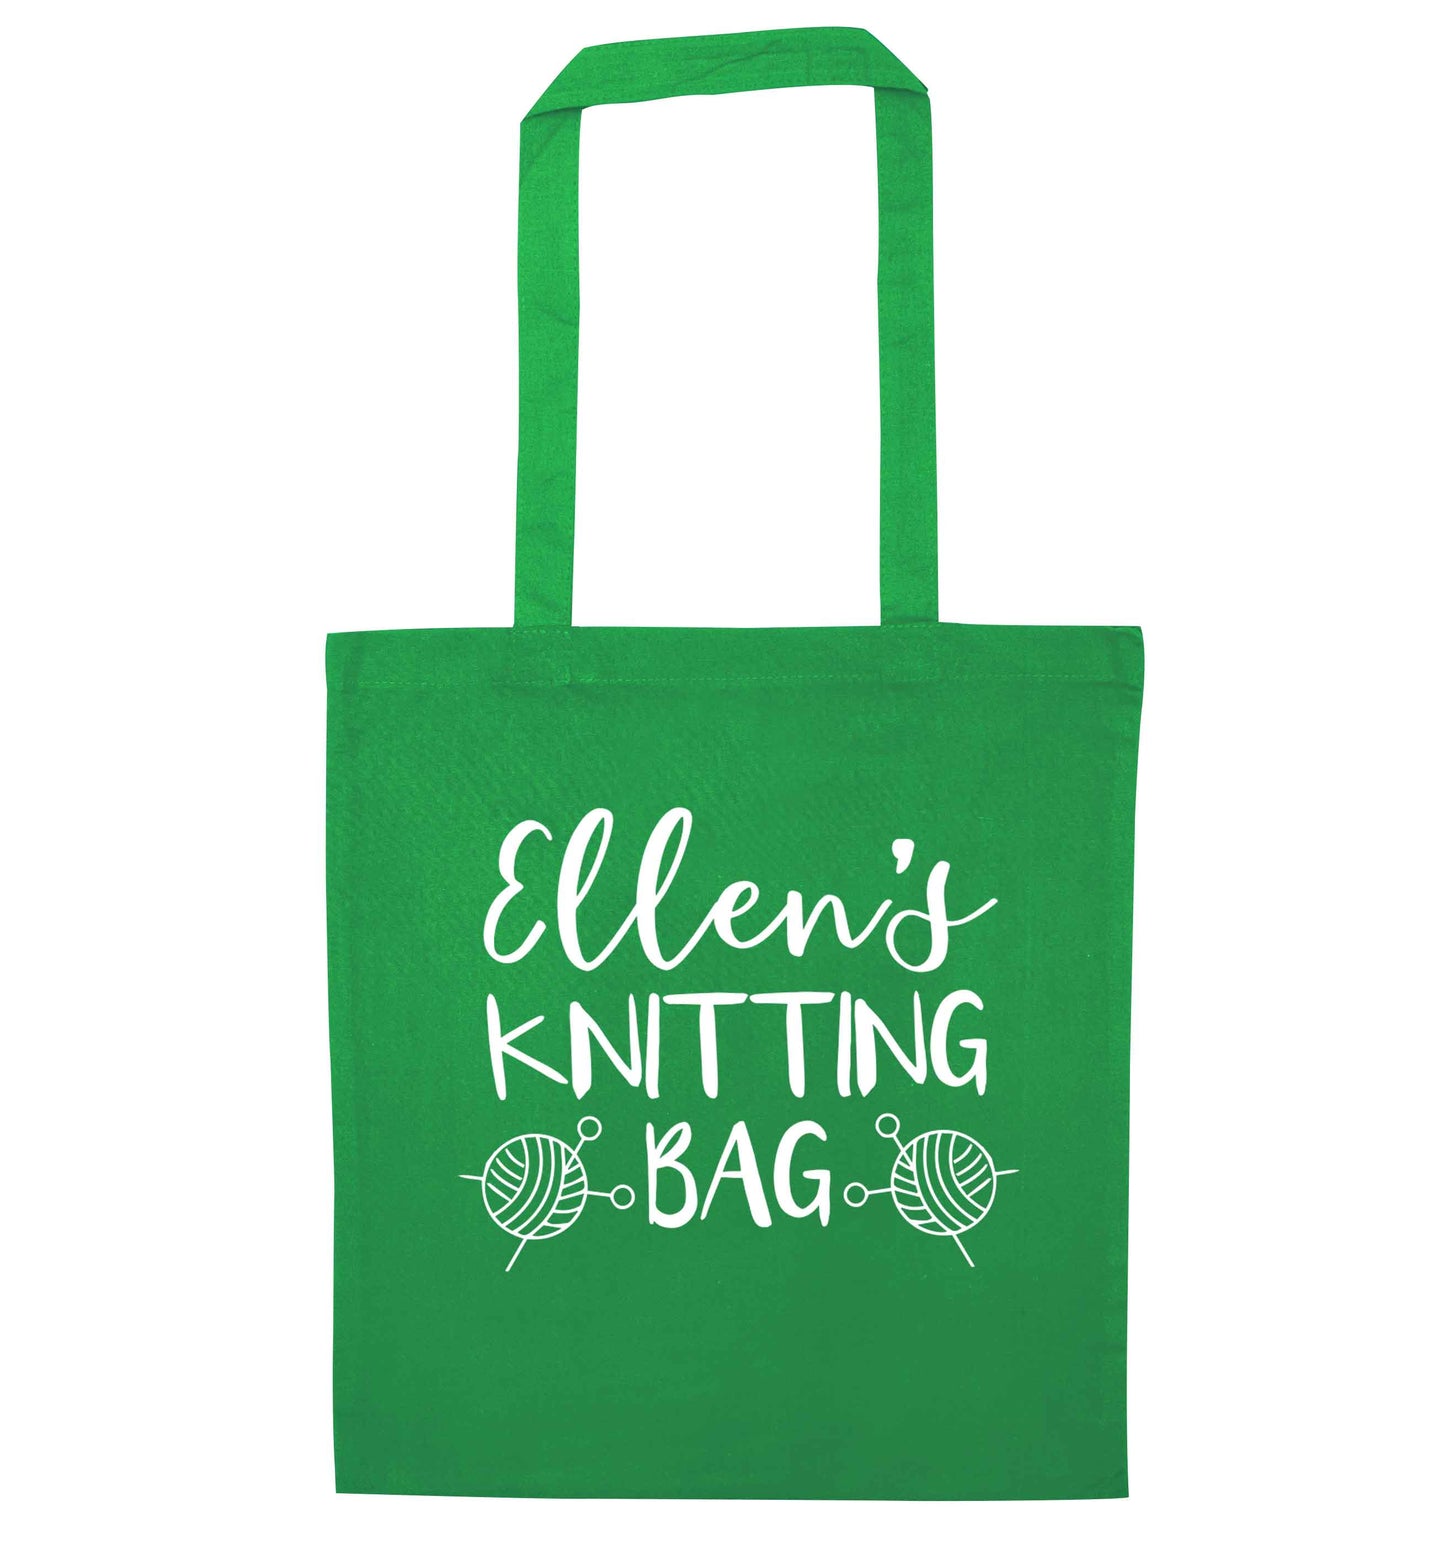 Personalised knitting bag green tote bag